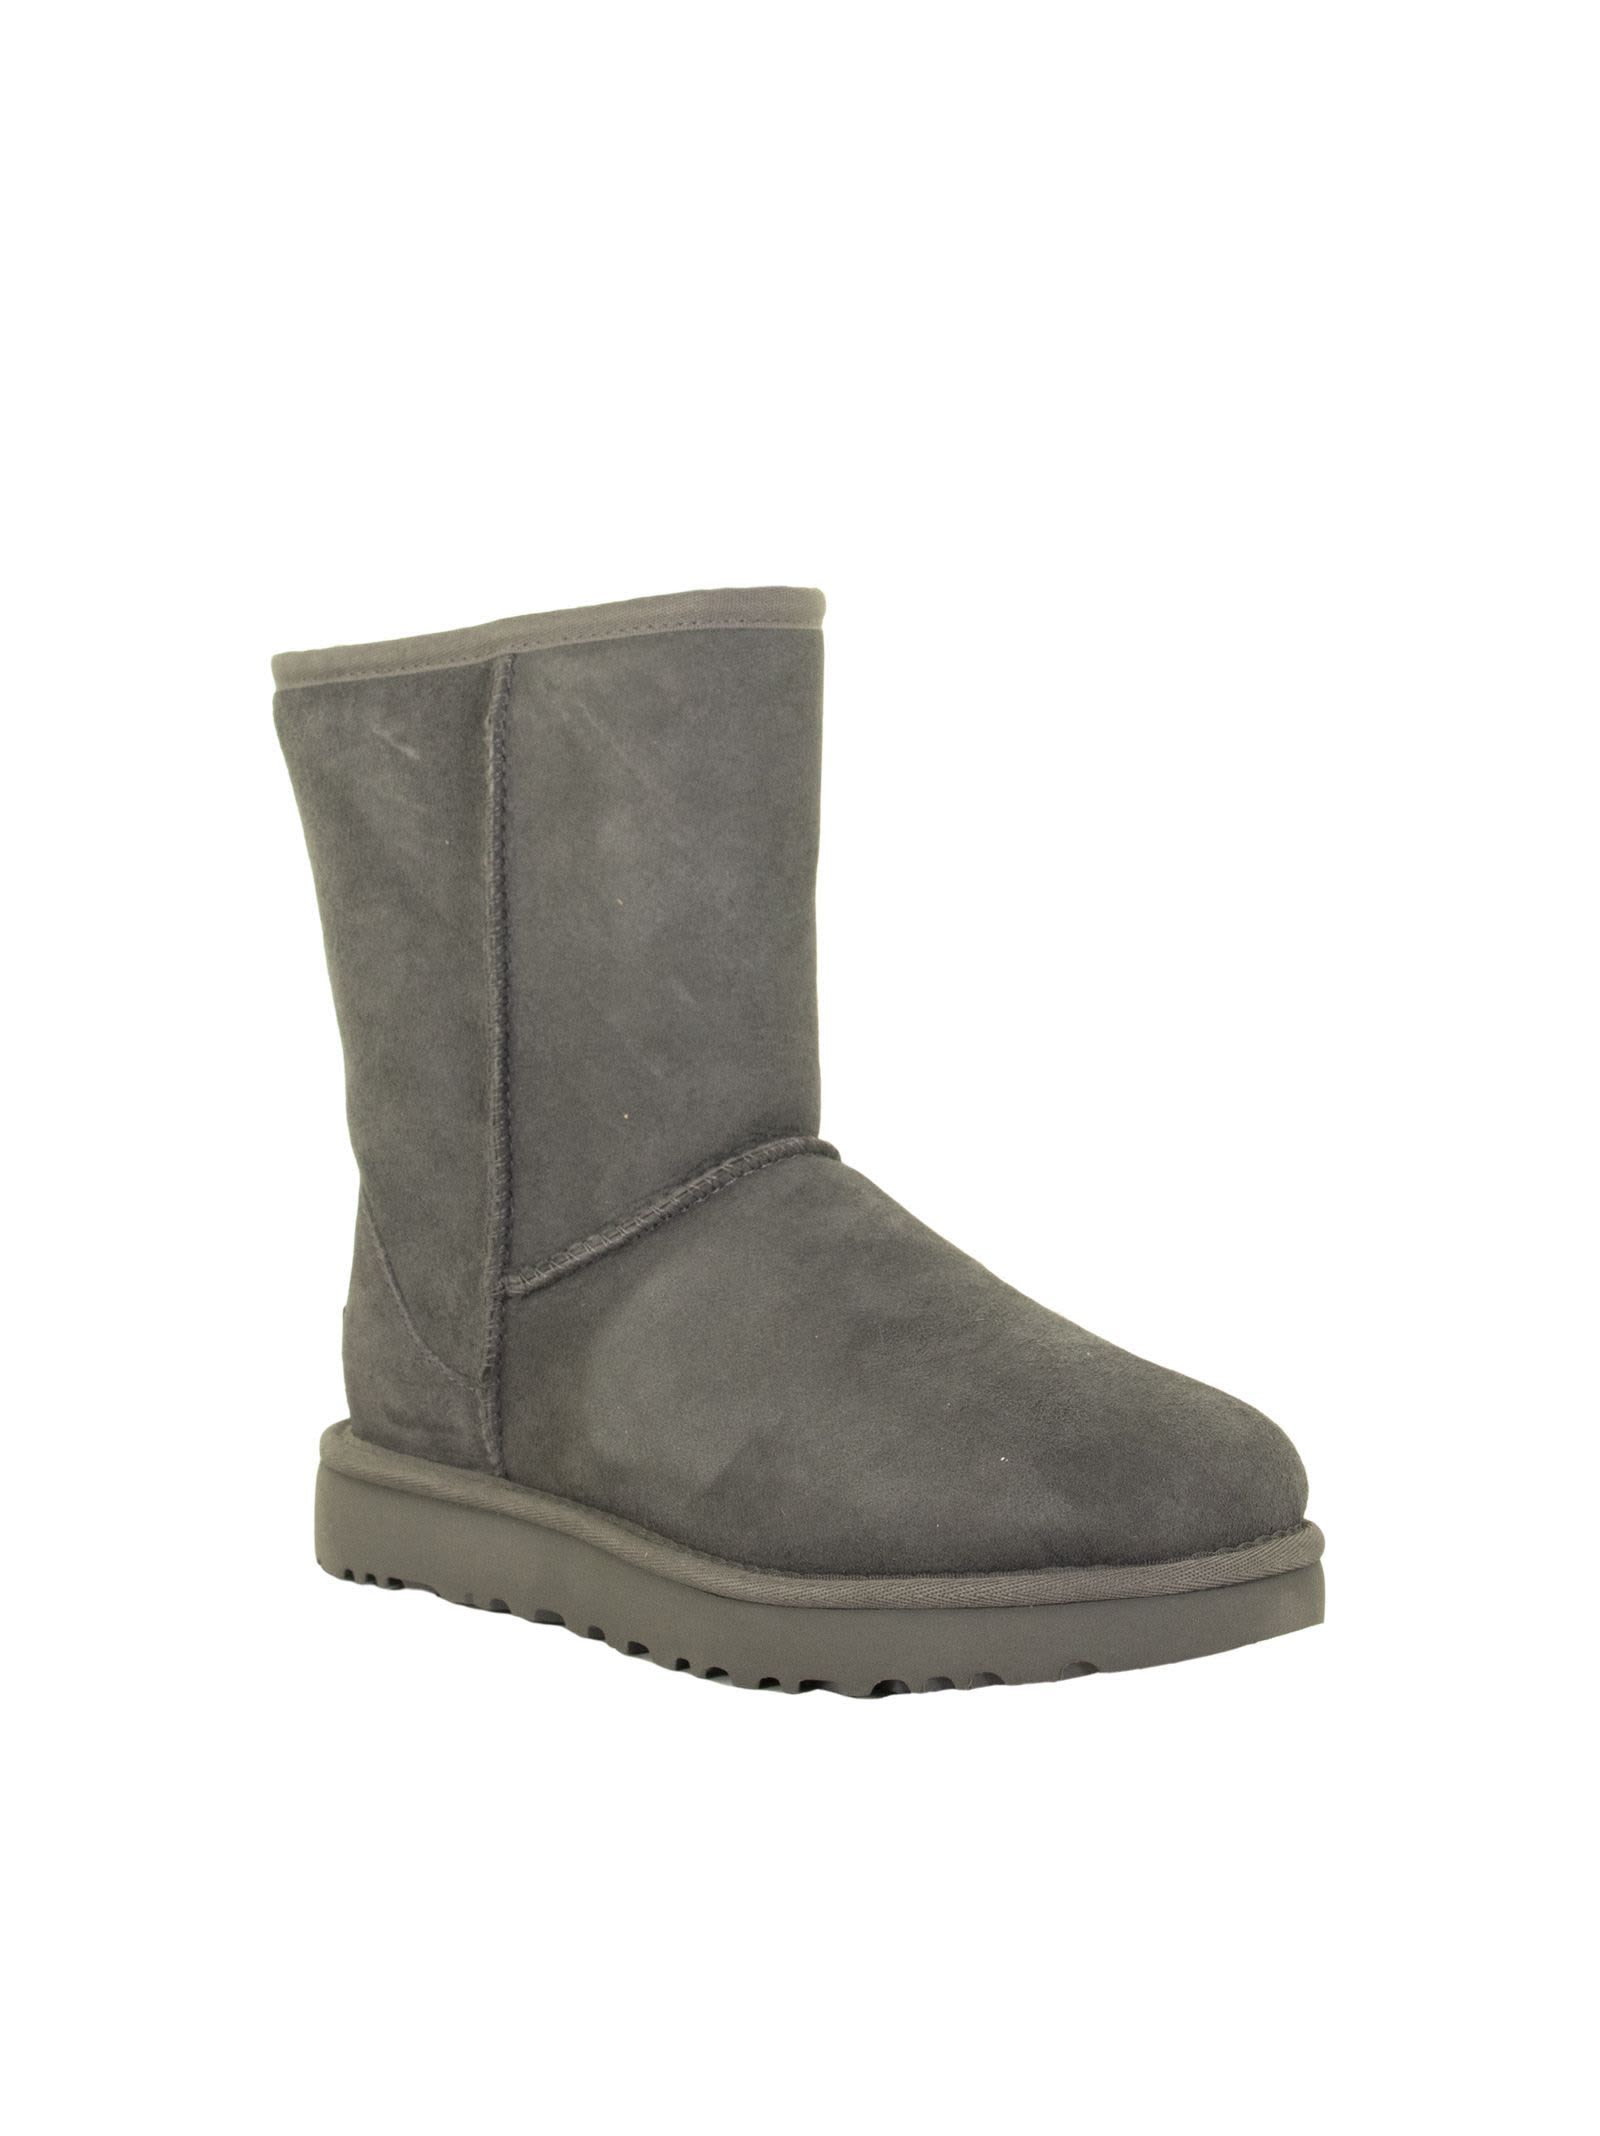 short gray ugg boots